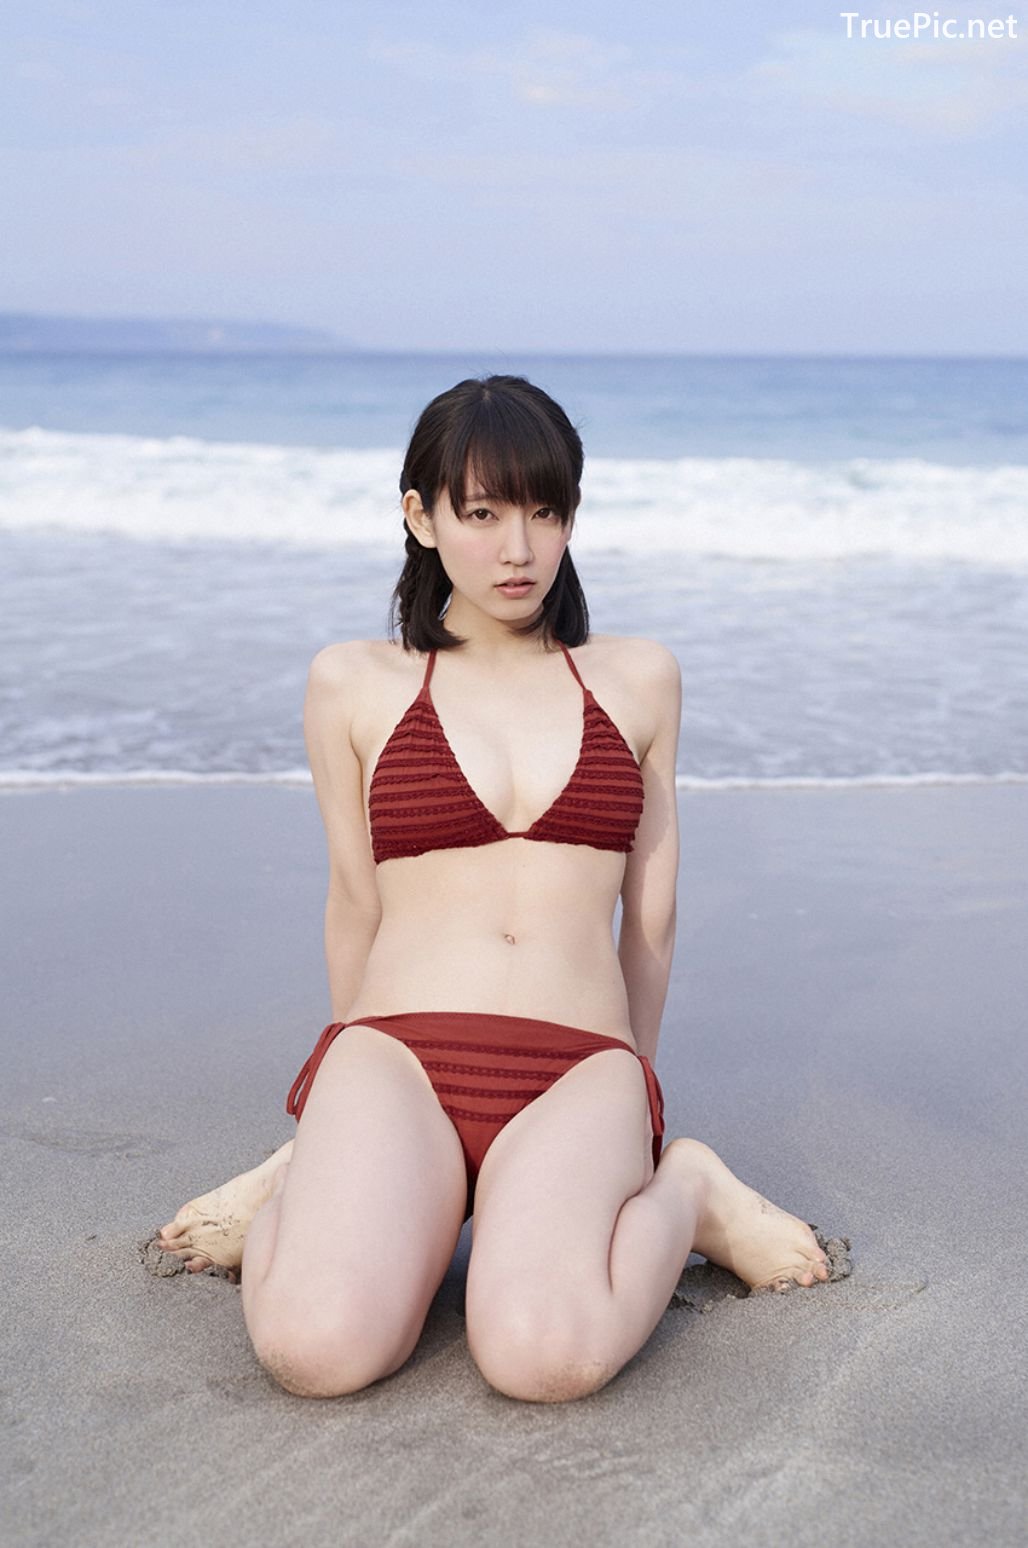 Image-Japanese-Actress-And-Model-Riho-Yoshioka-Pure-Beauty-Of-Sea-Goddess-TruePic.net- Picture-67